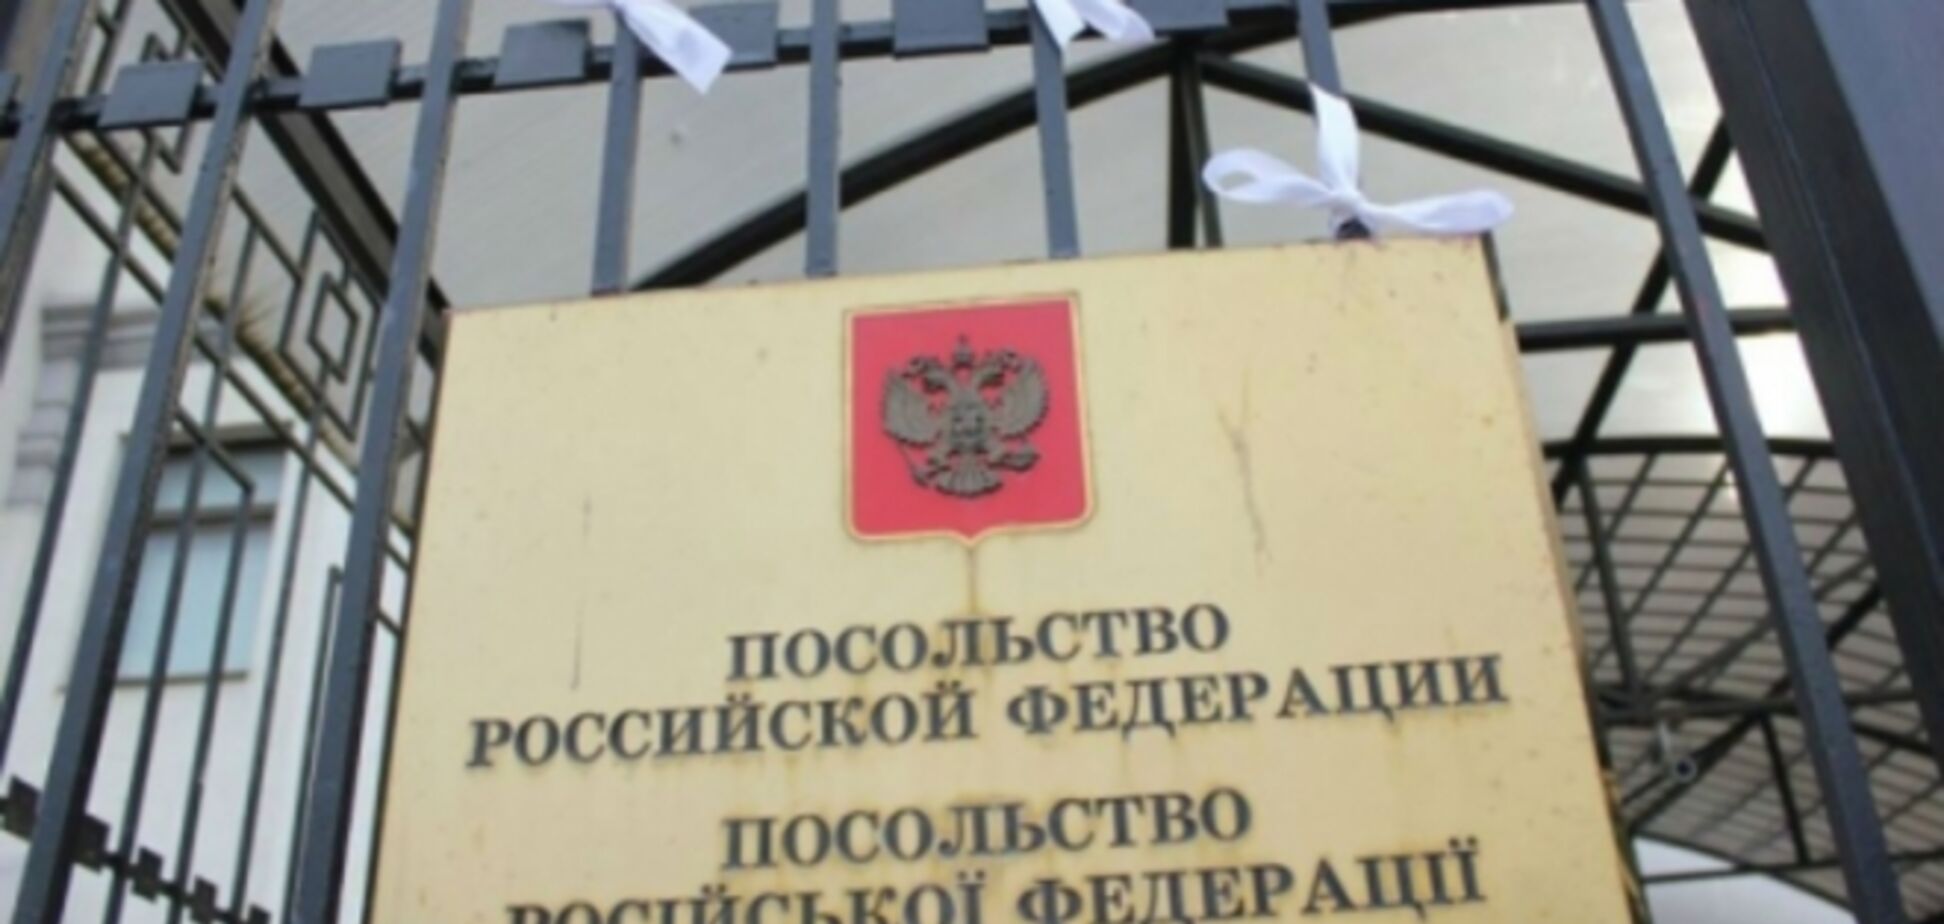 Посольство РФ в Києві запропонували 'перенести' на проспект Бандери